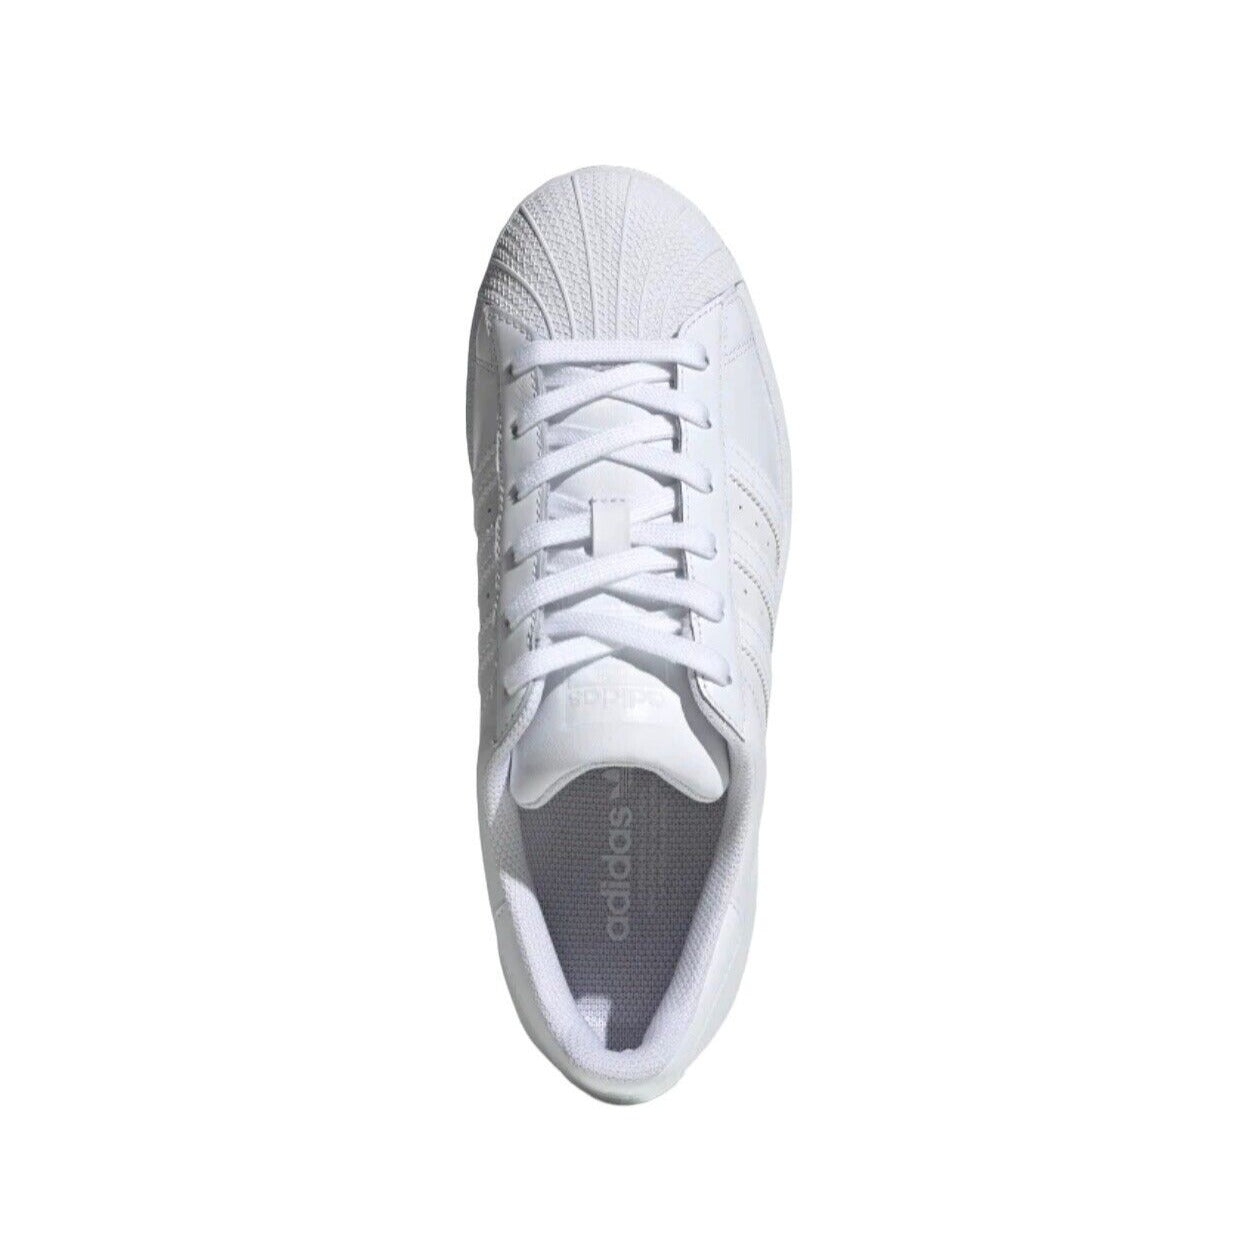 bird's eye view of top of white Adidas sneaker